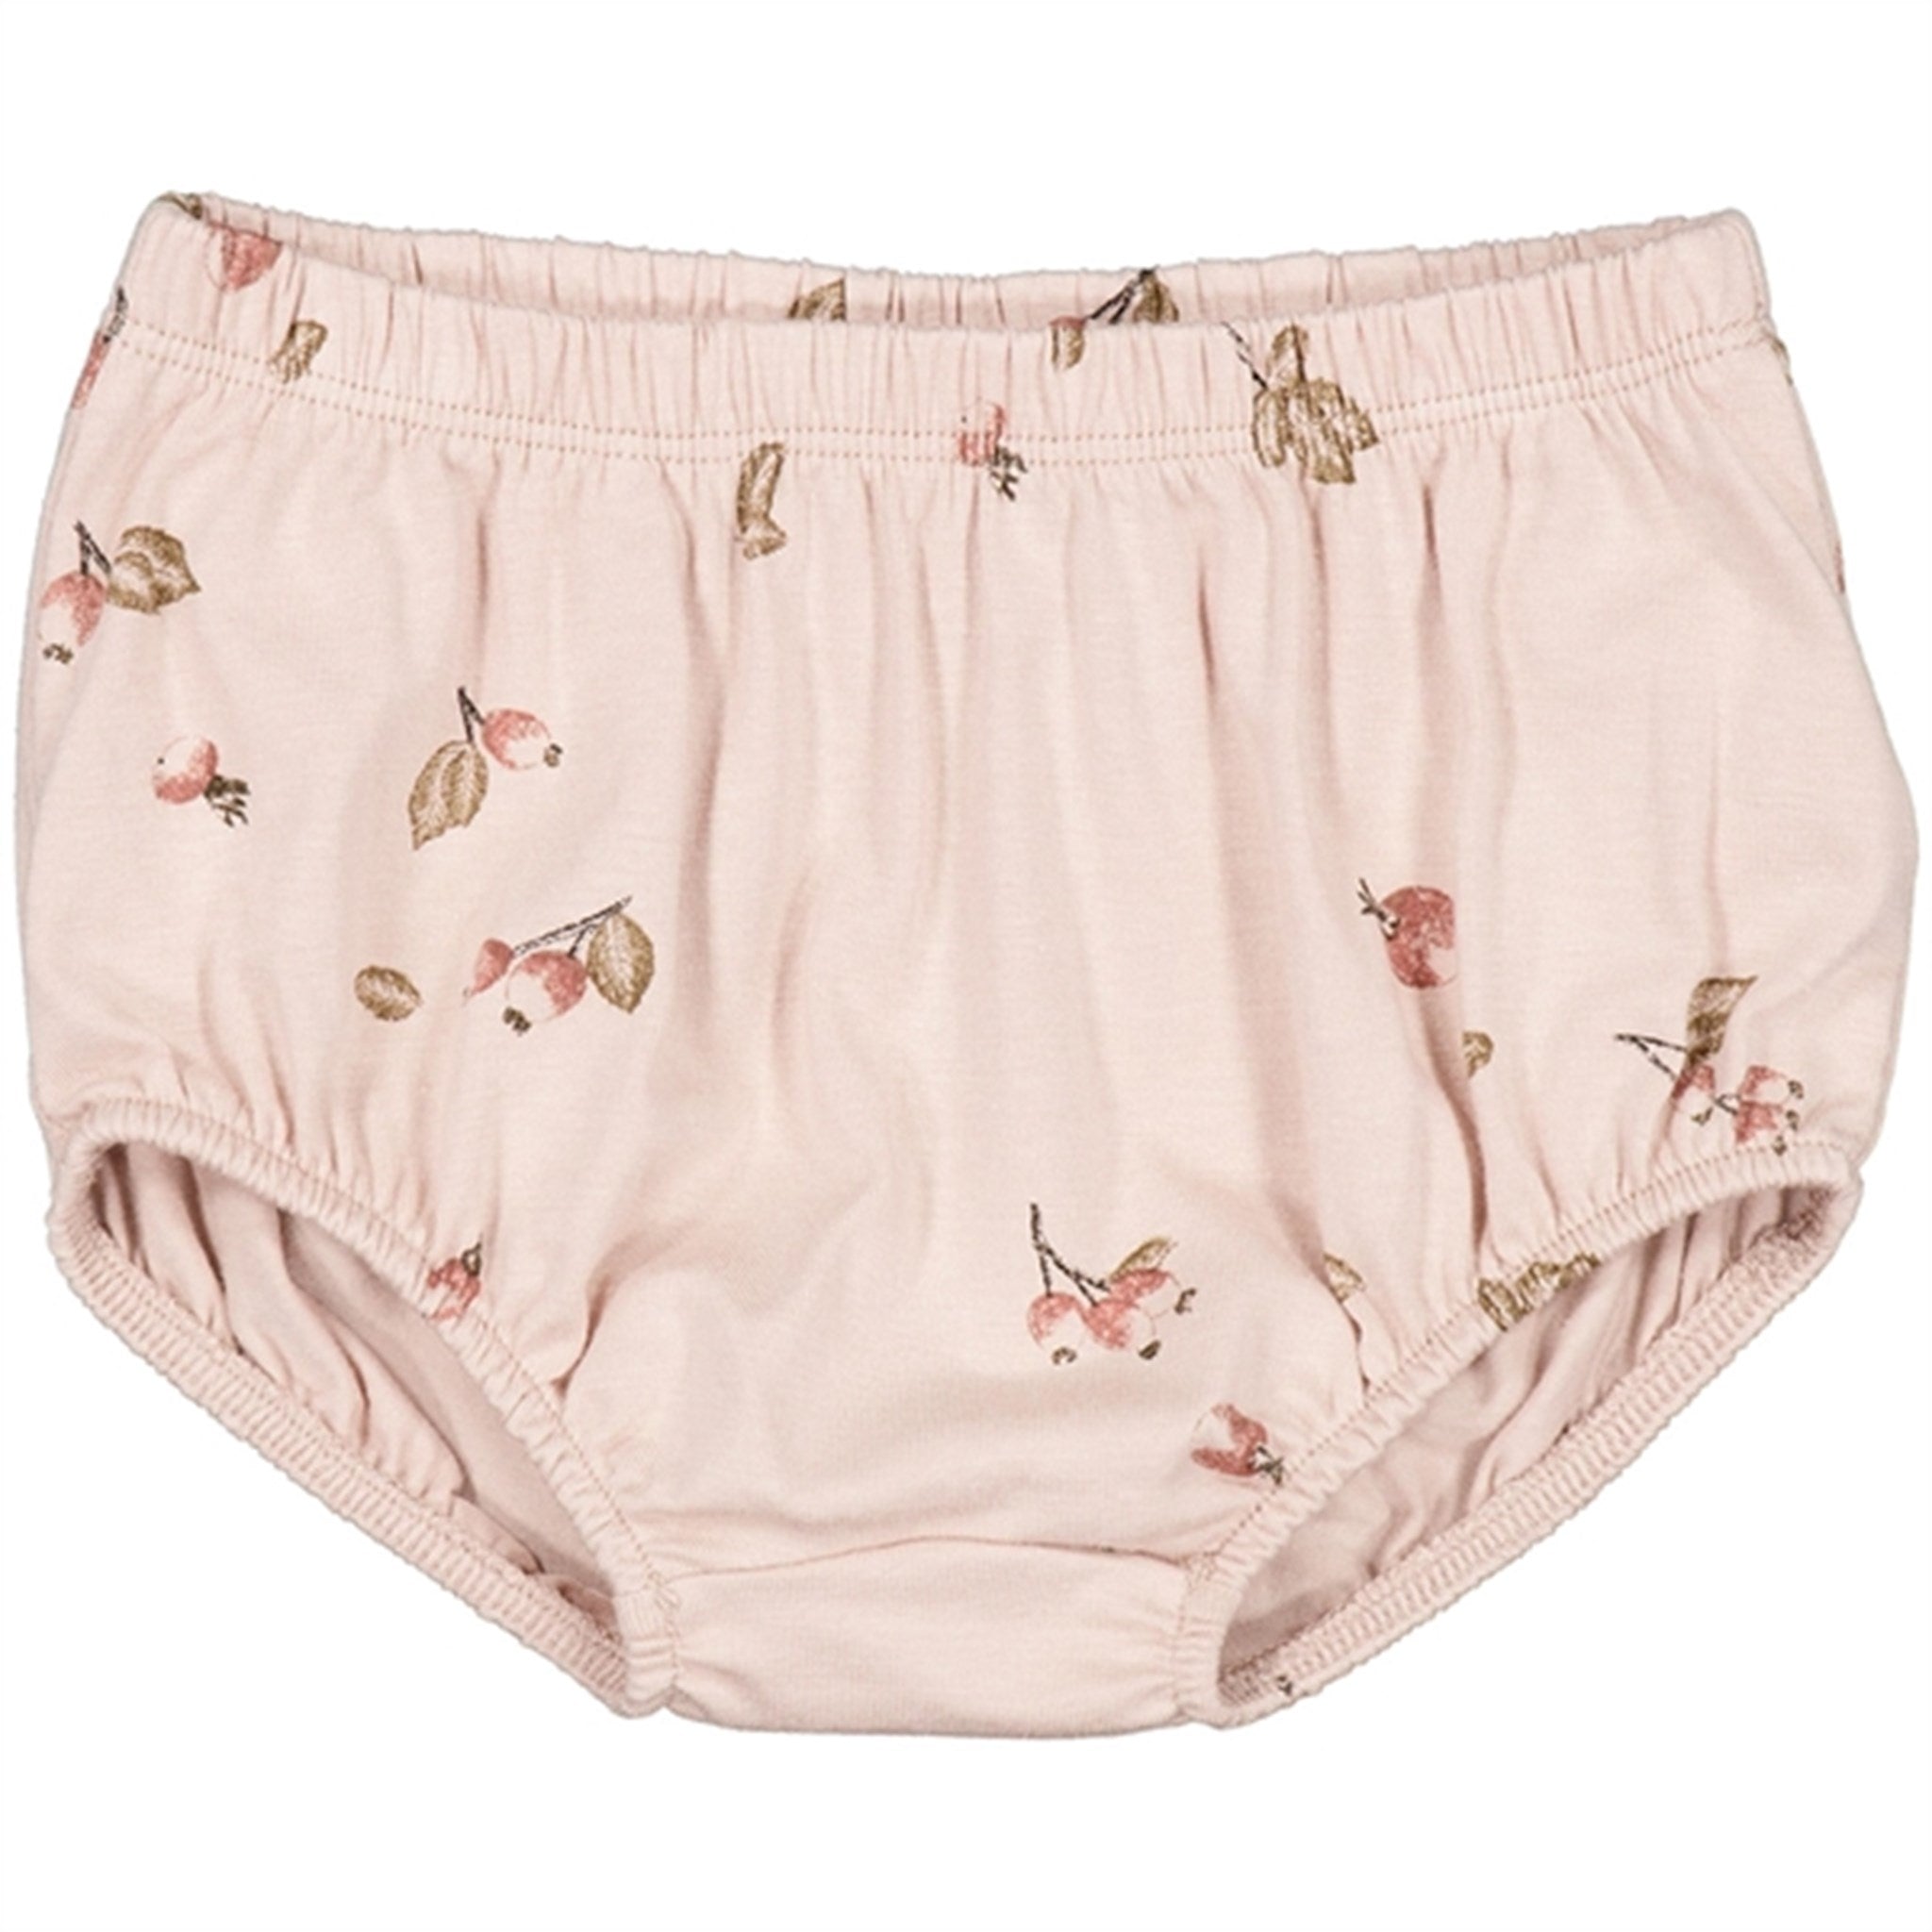 MarMar Rosehips Popia Shorts/Bloomers